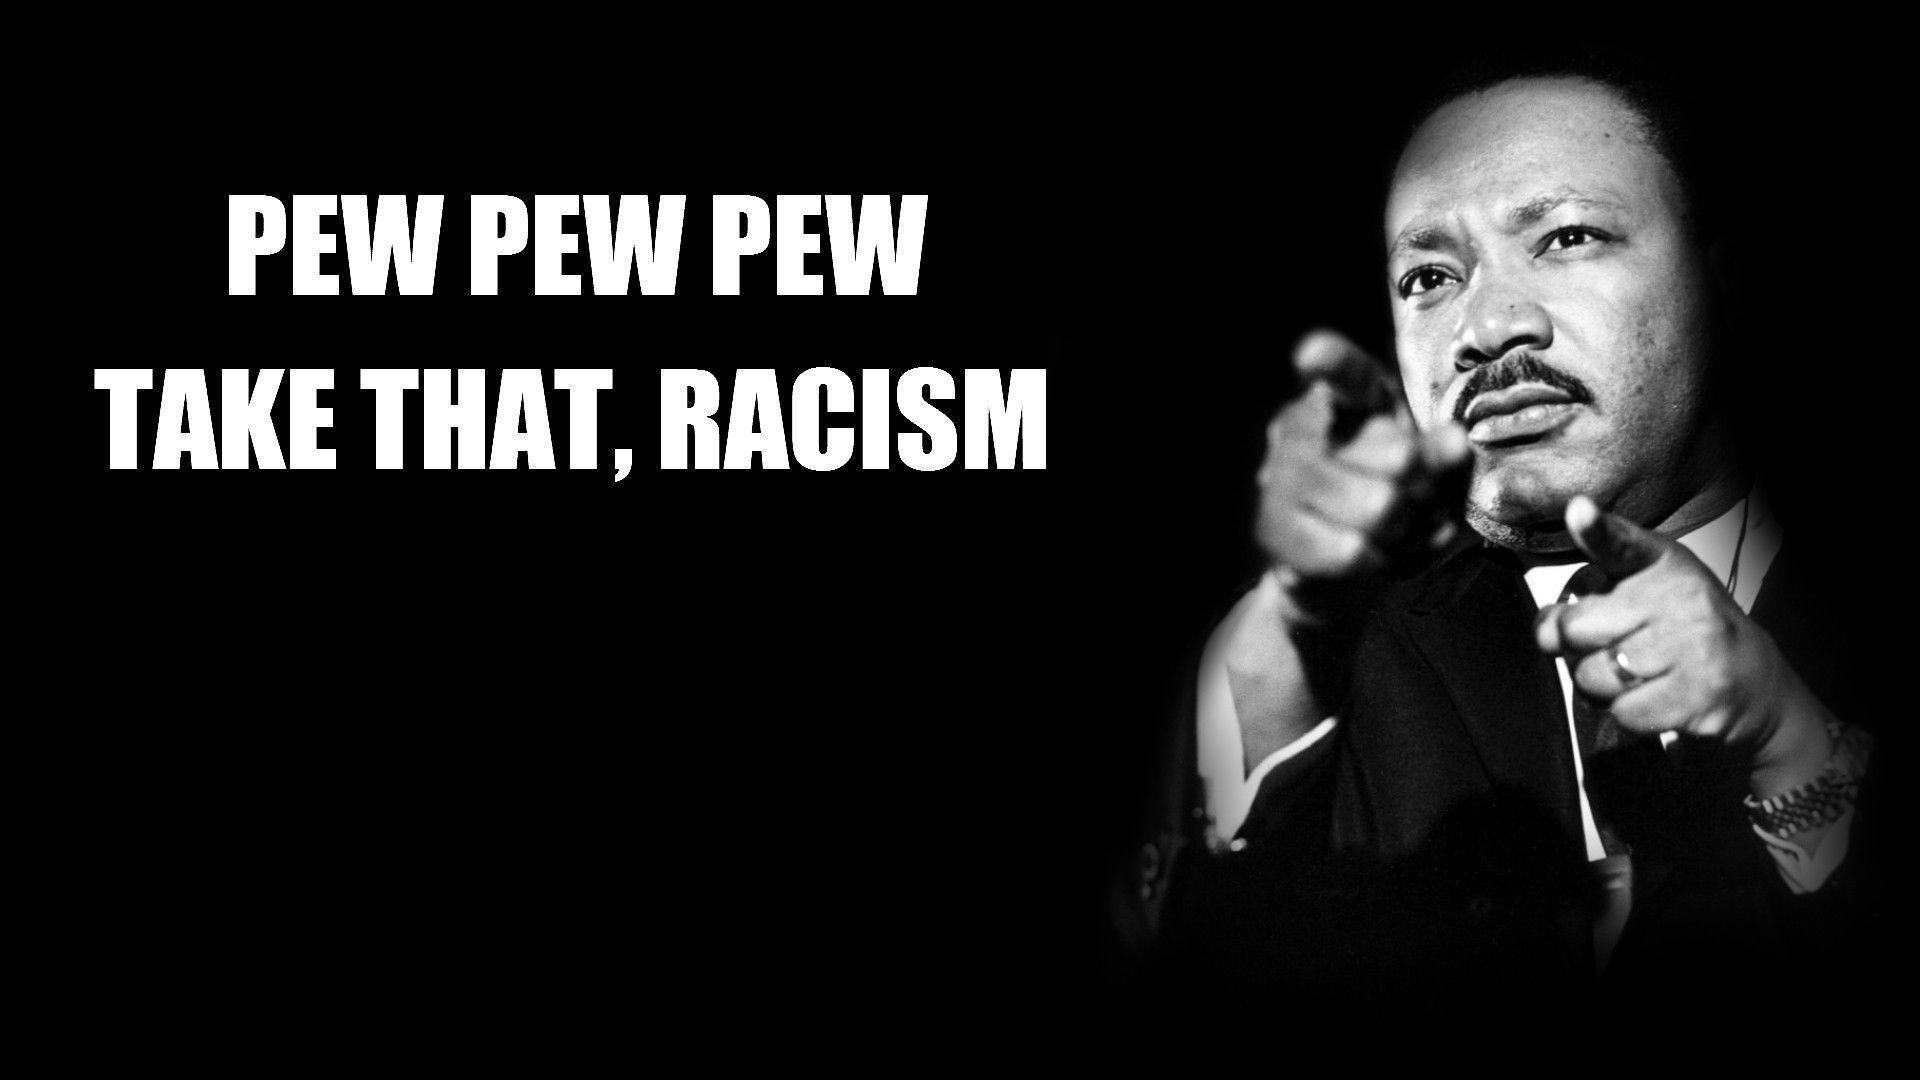 Words of wisdom from MLK Jr